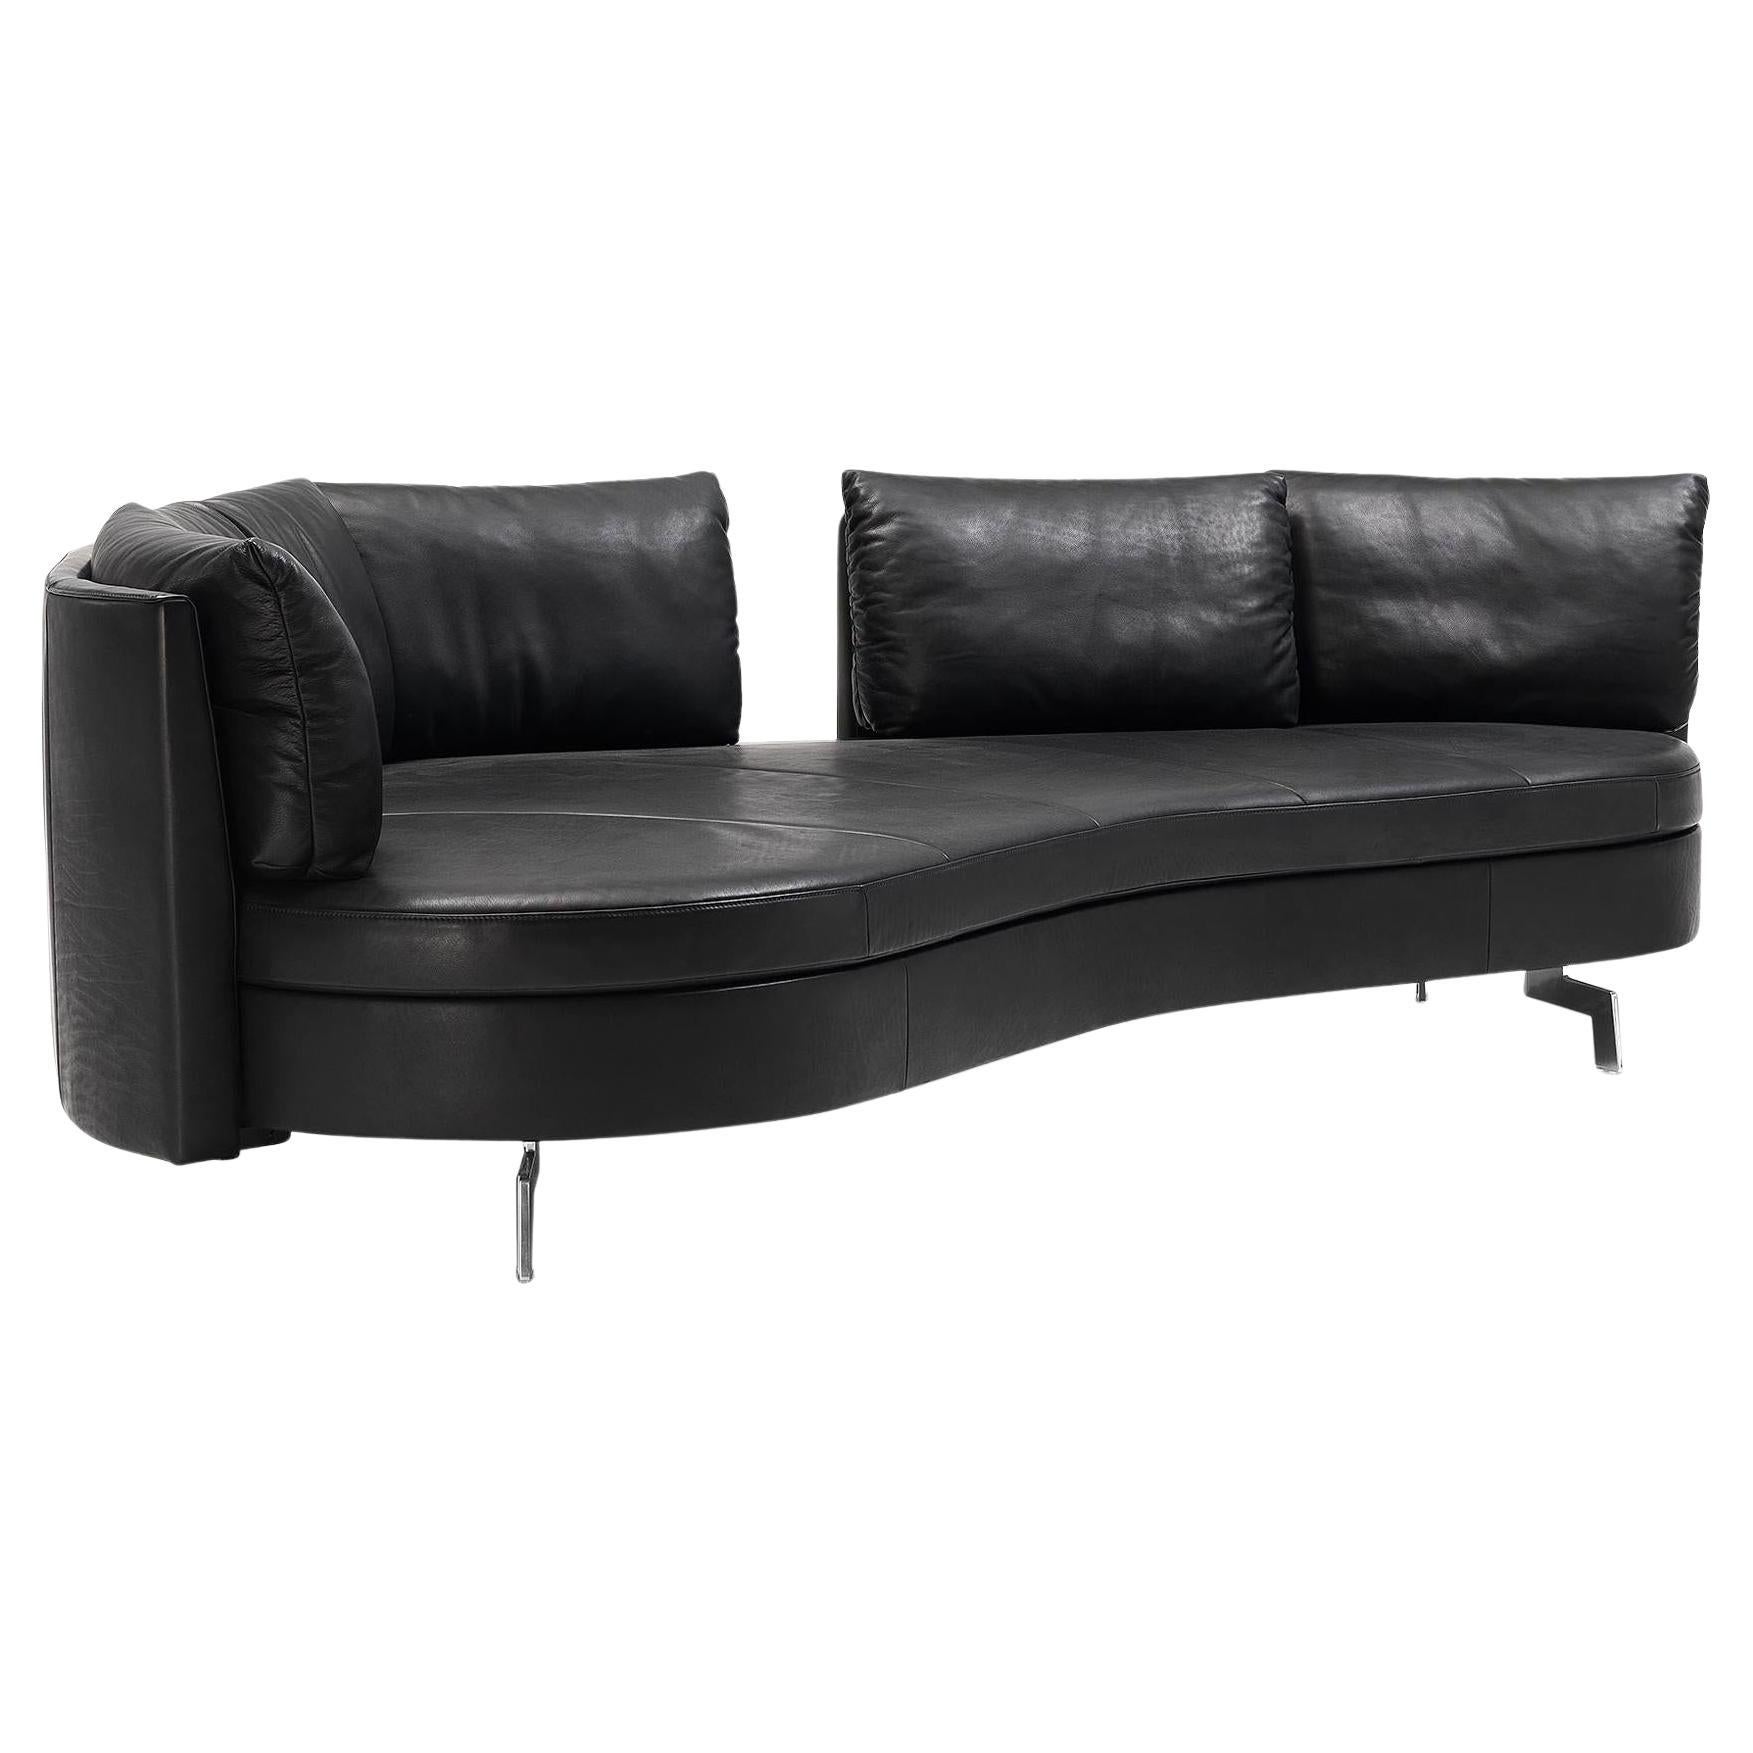 De Sede DS-167 Sofa with Movable Backrest in Black Upholstery by Hugo de Ruiter